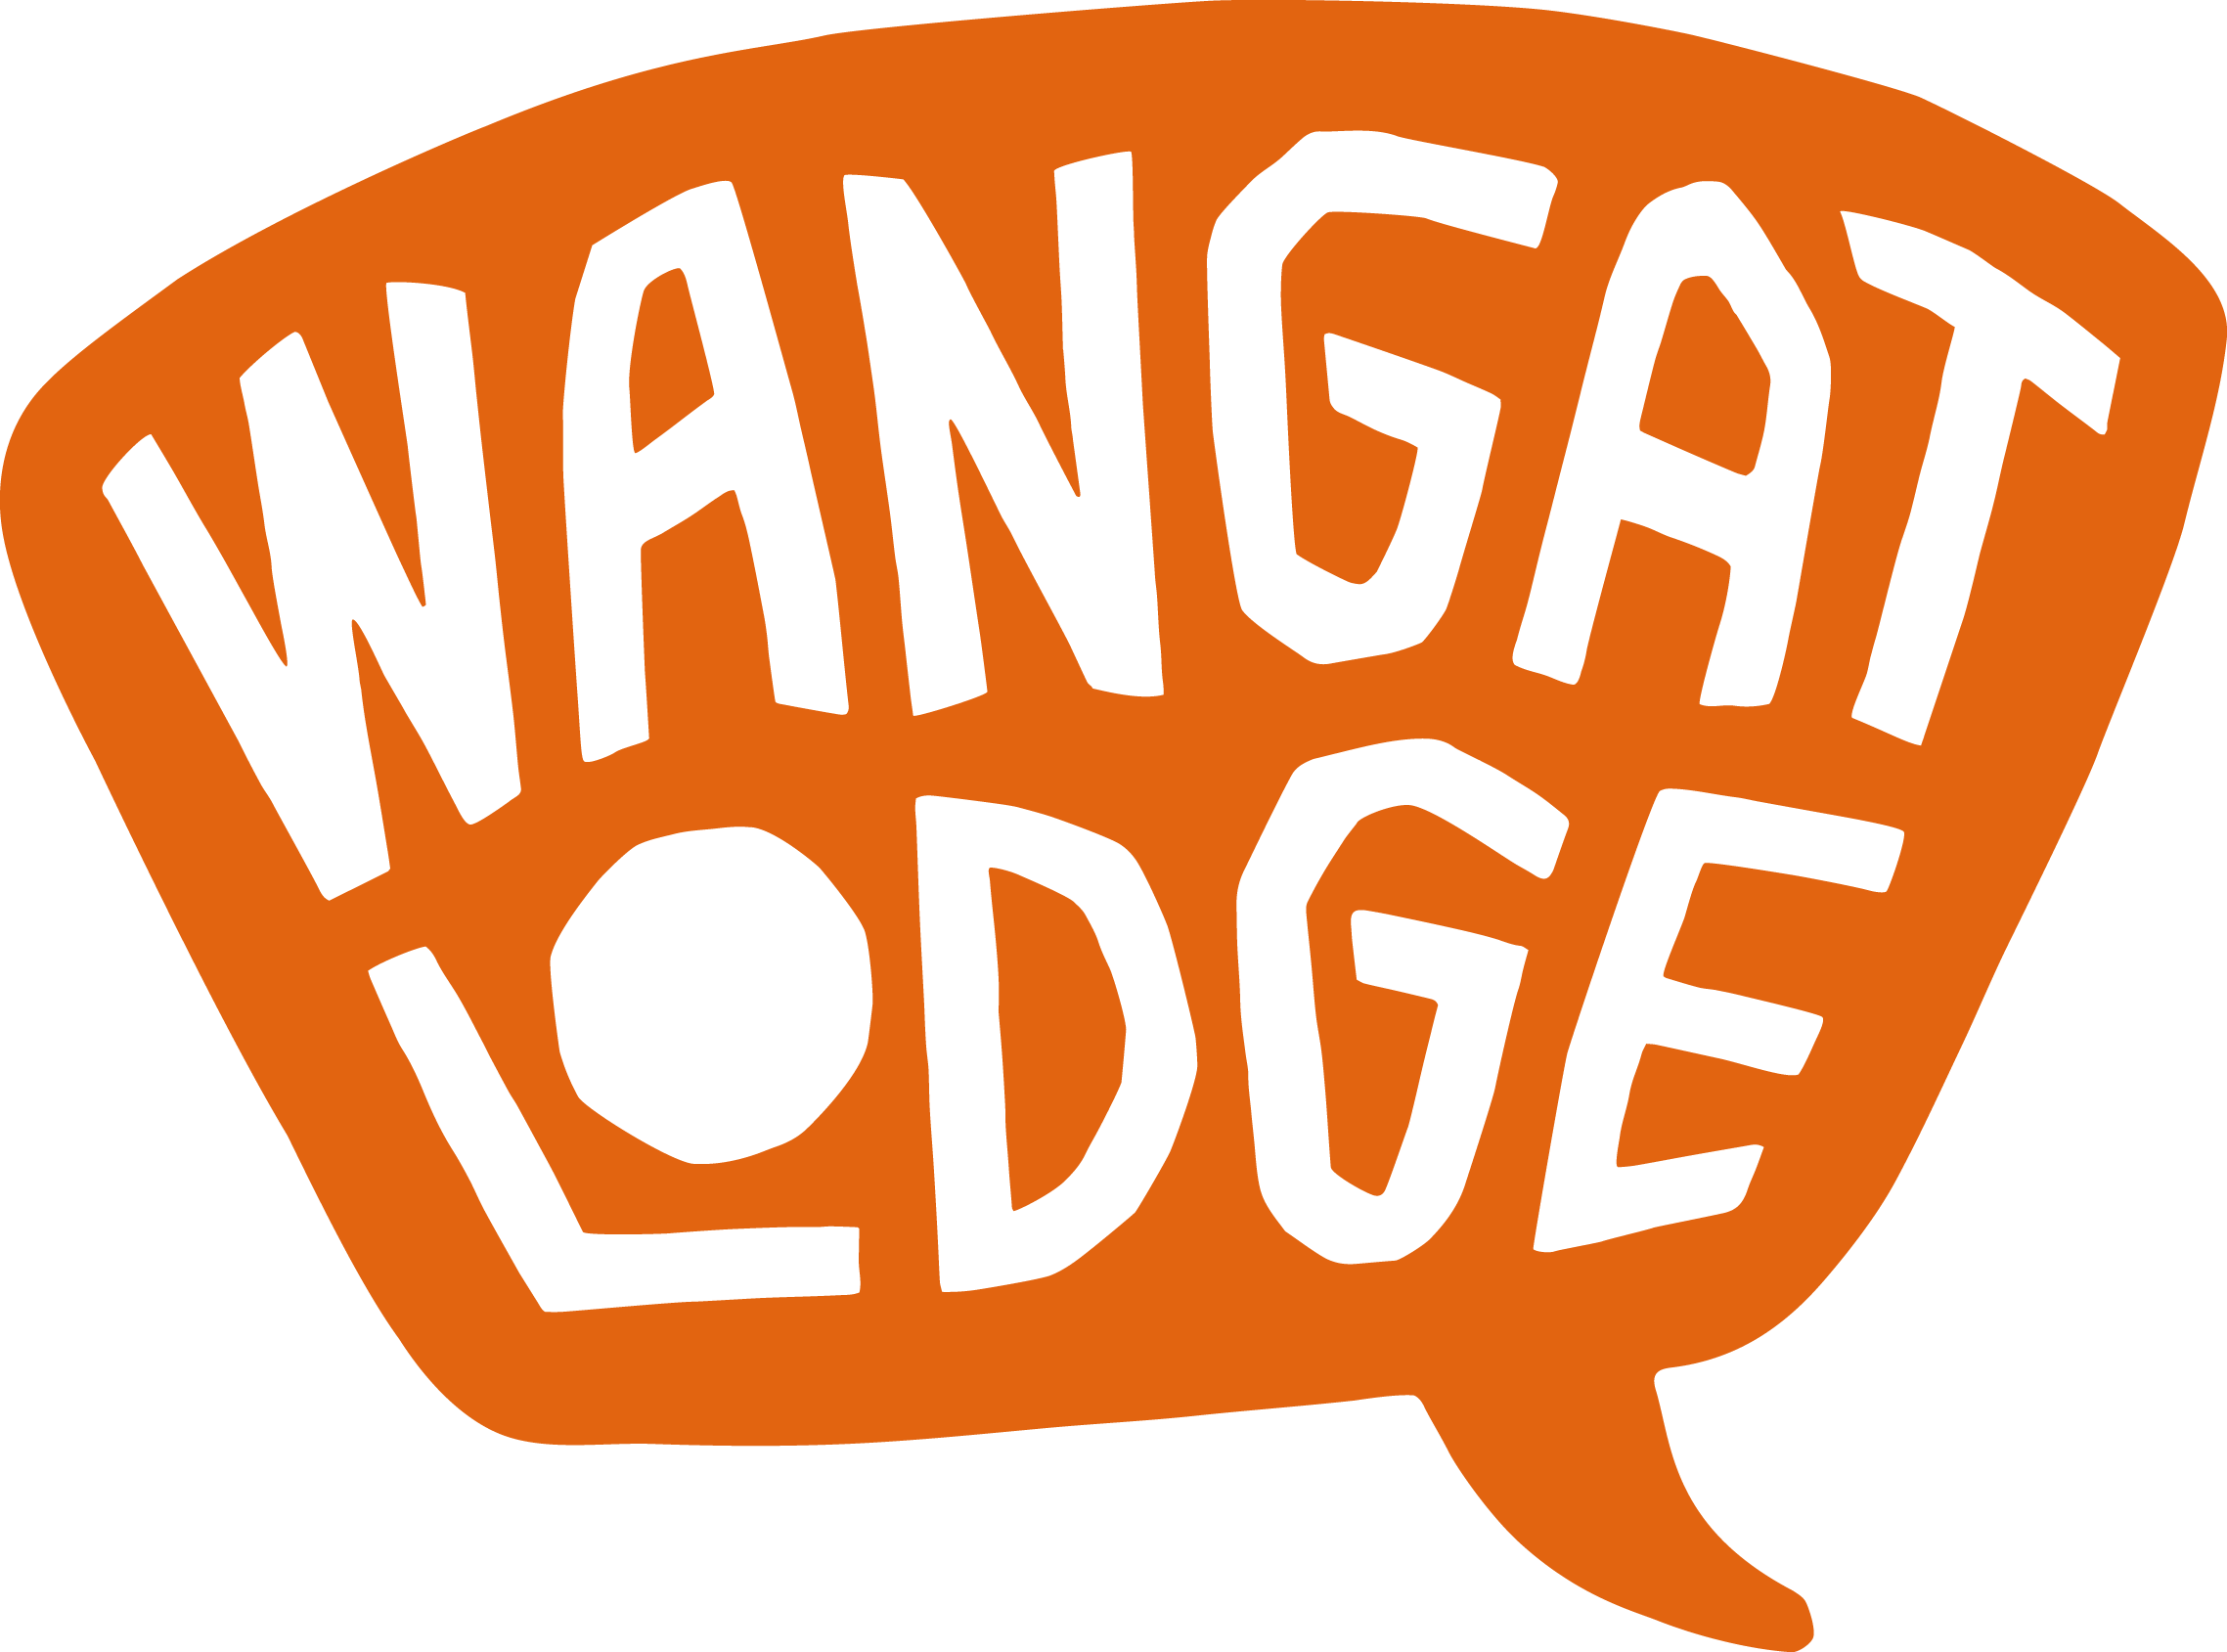 Wangat Lodge